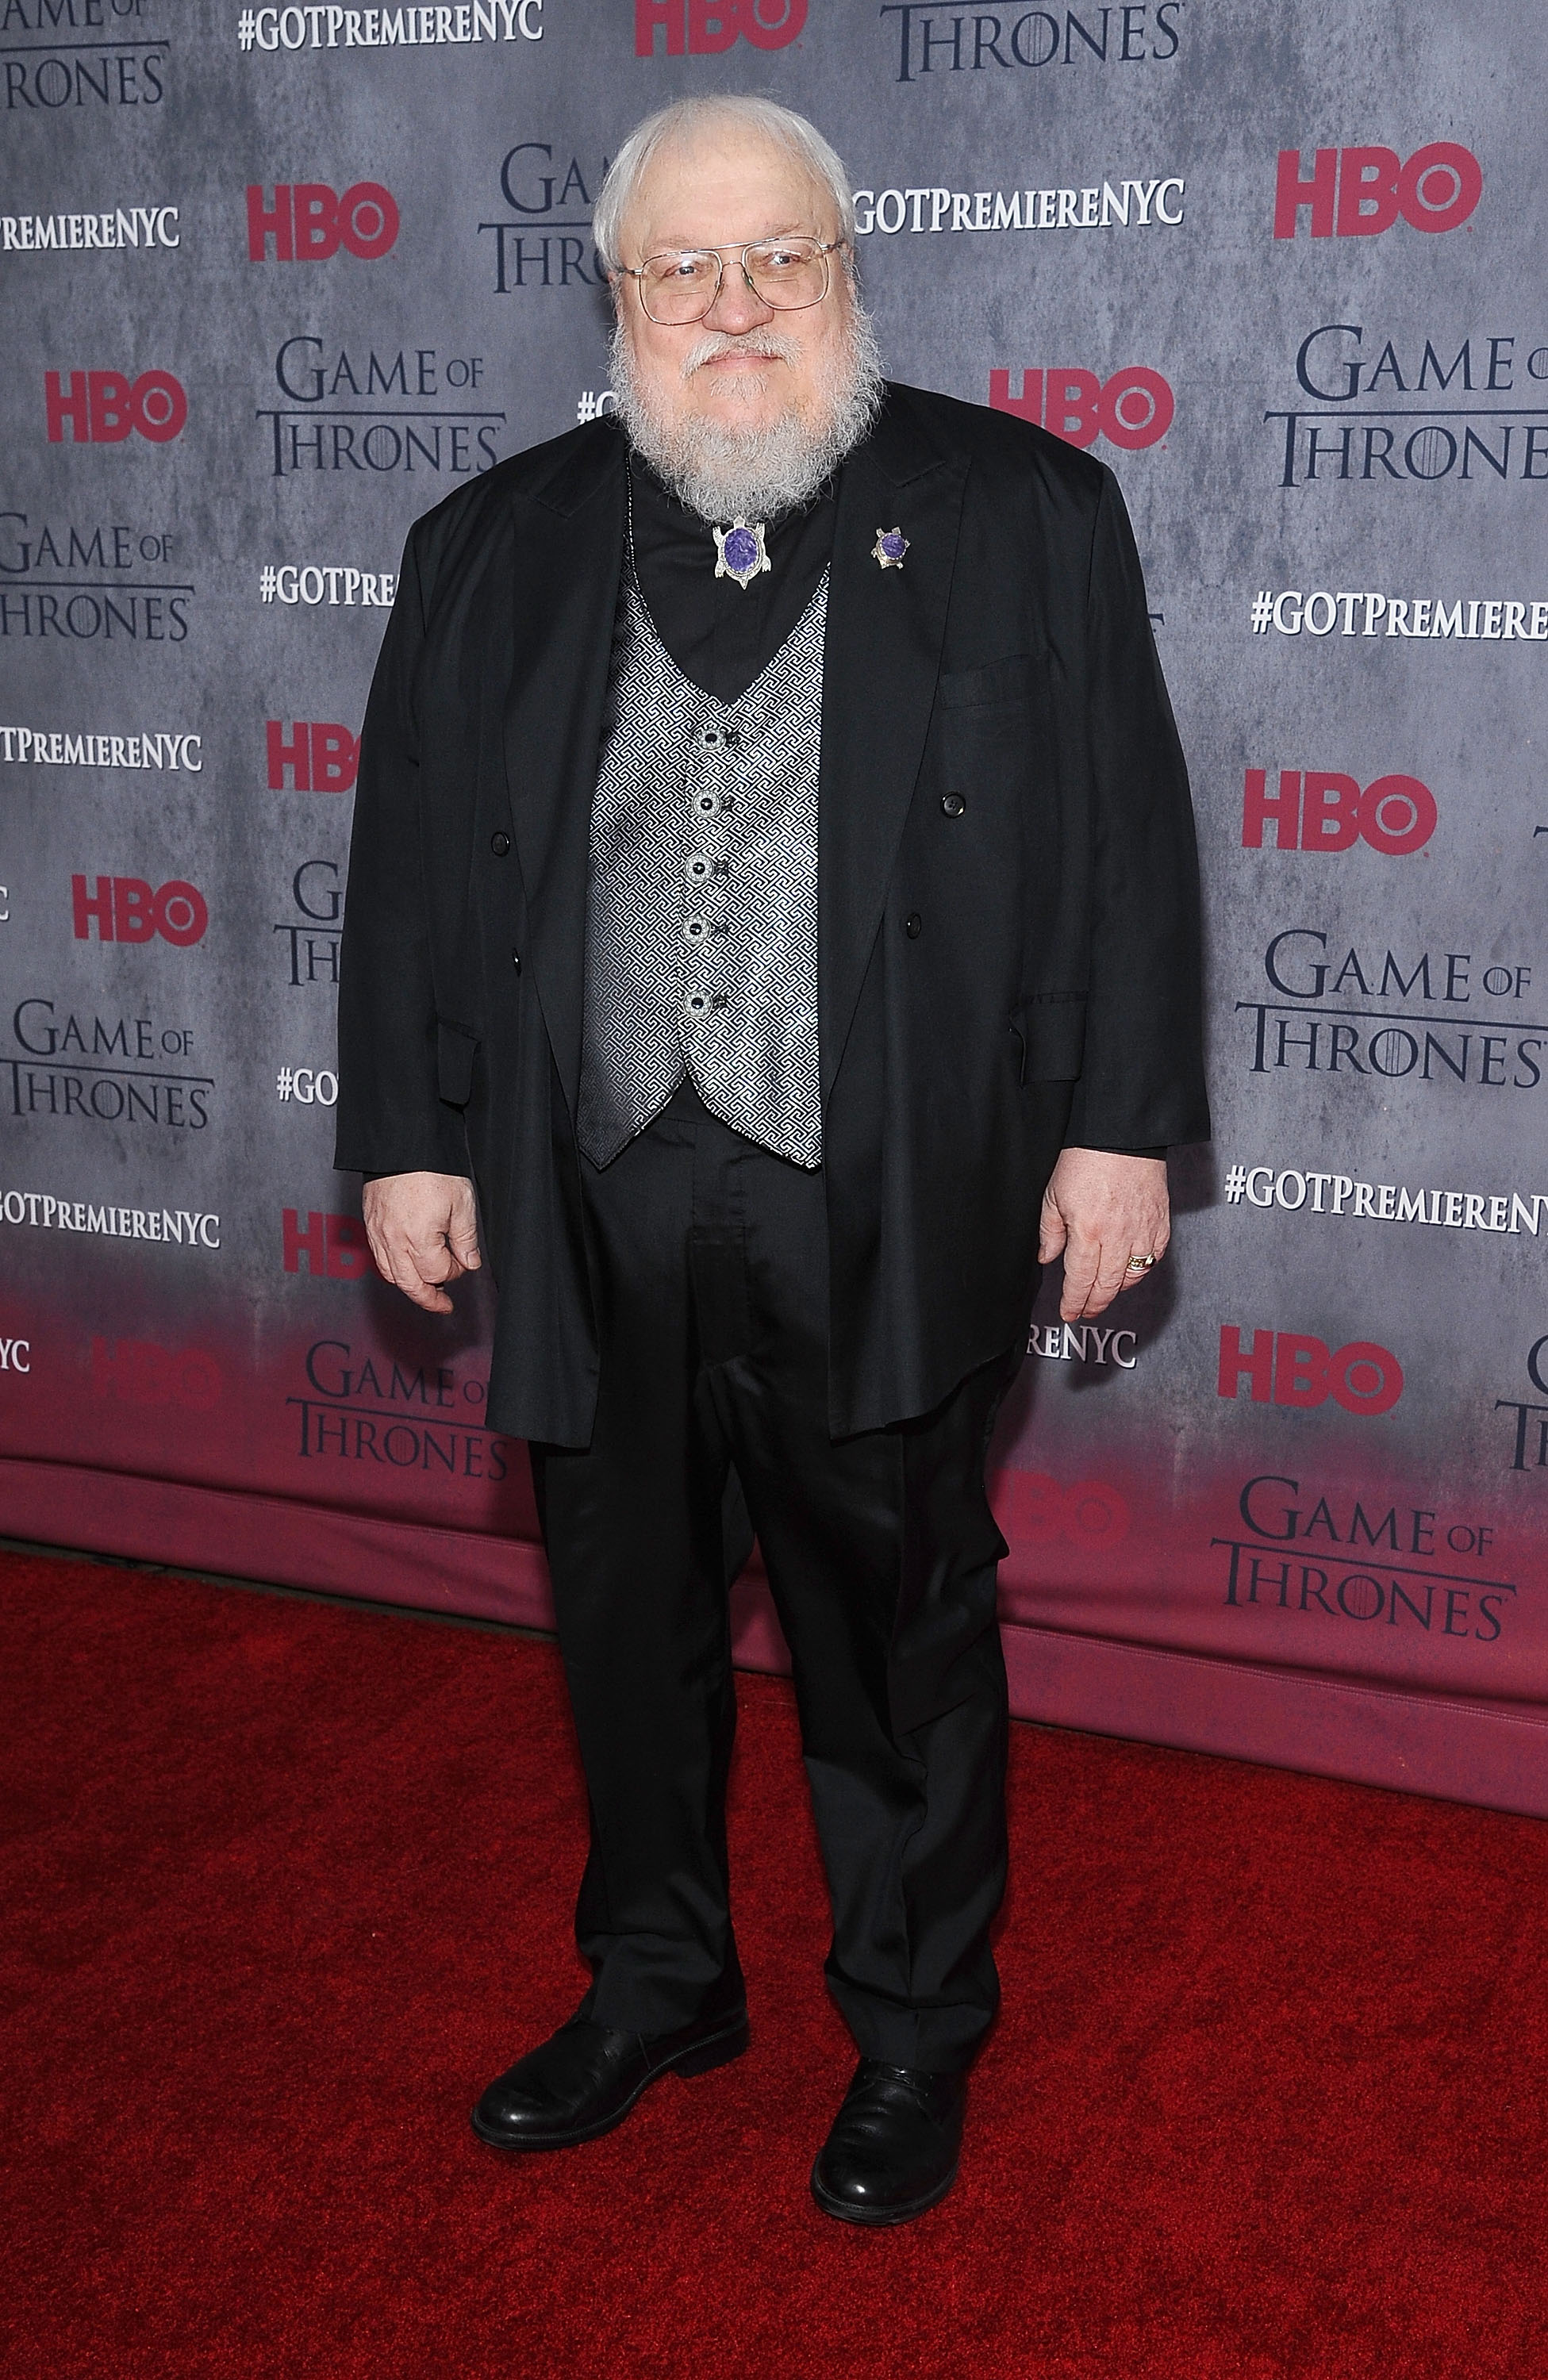 "Game Of Thrones" Season 4 New York Premiere - Arrivals